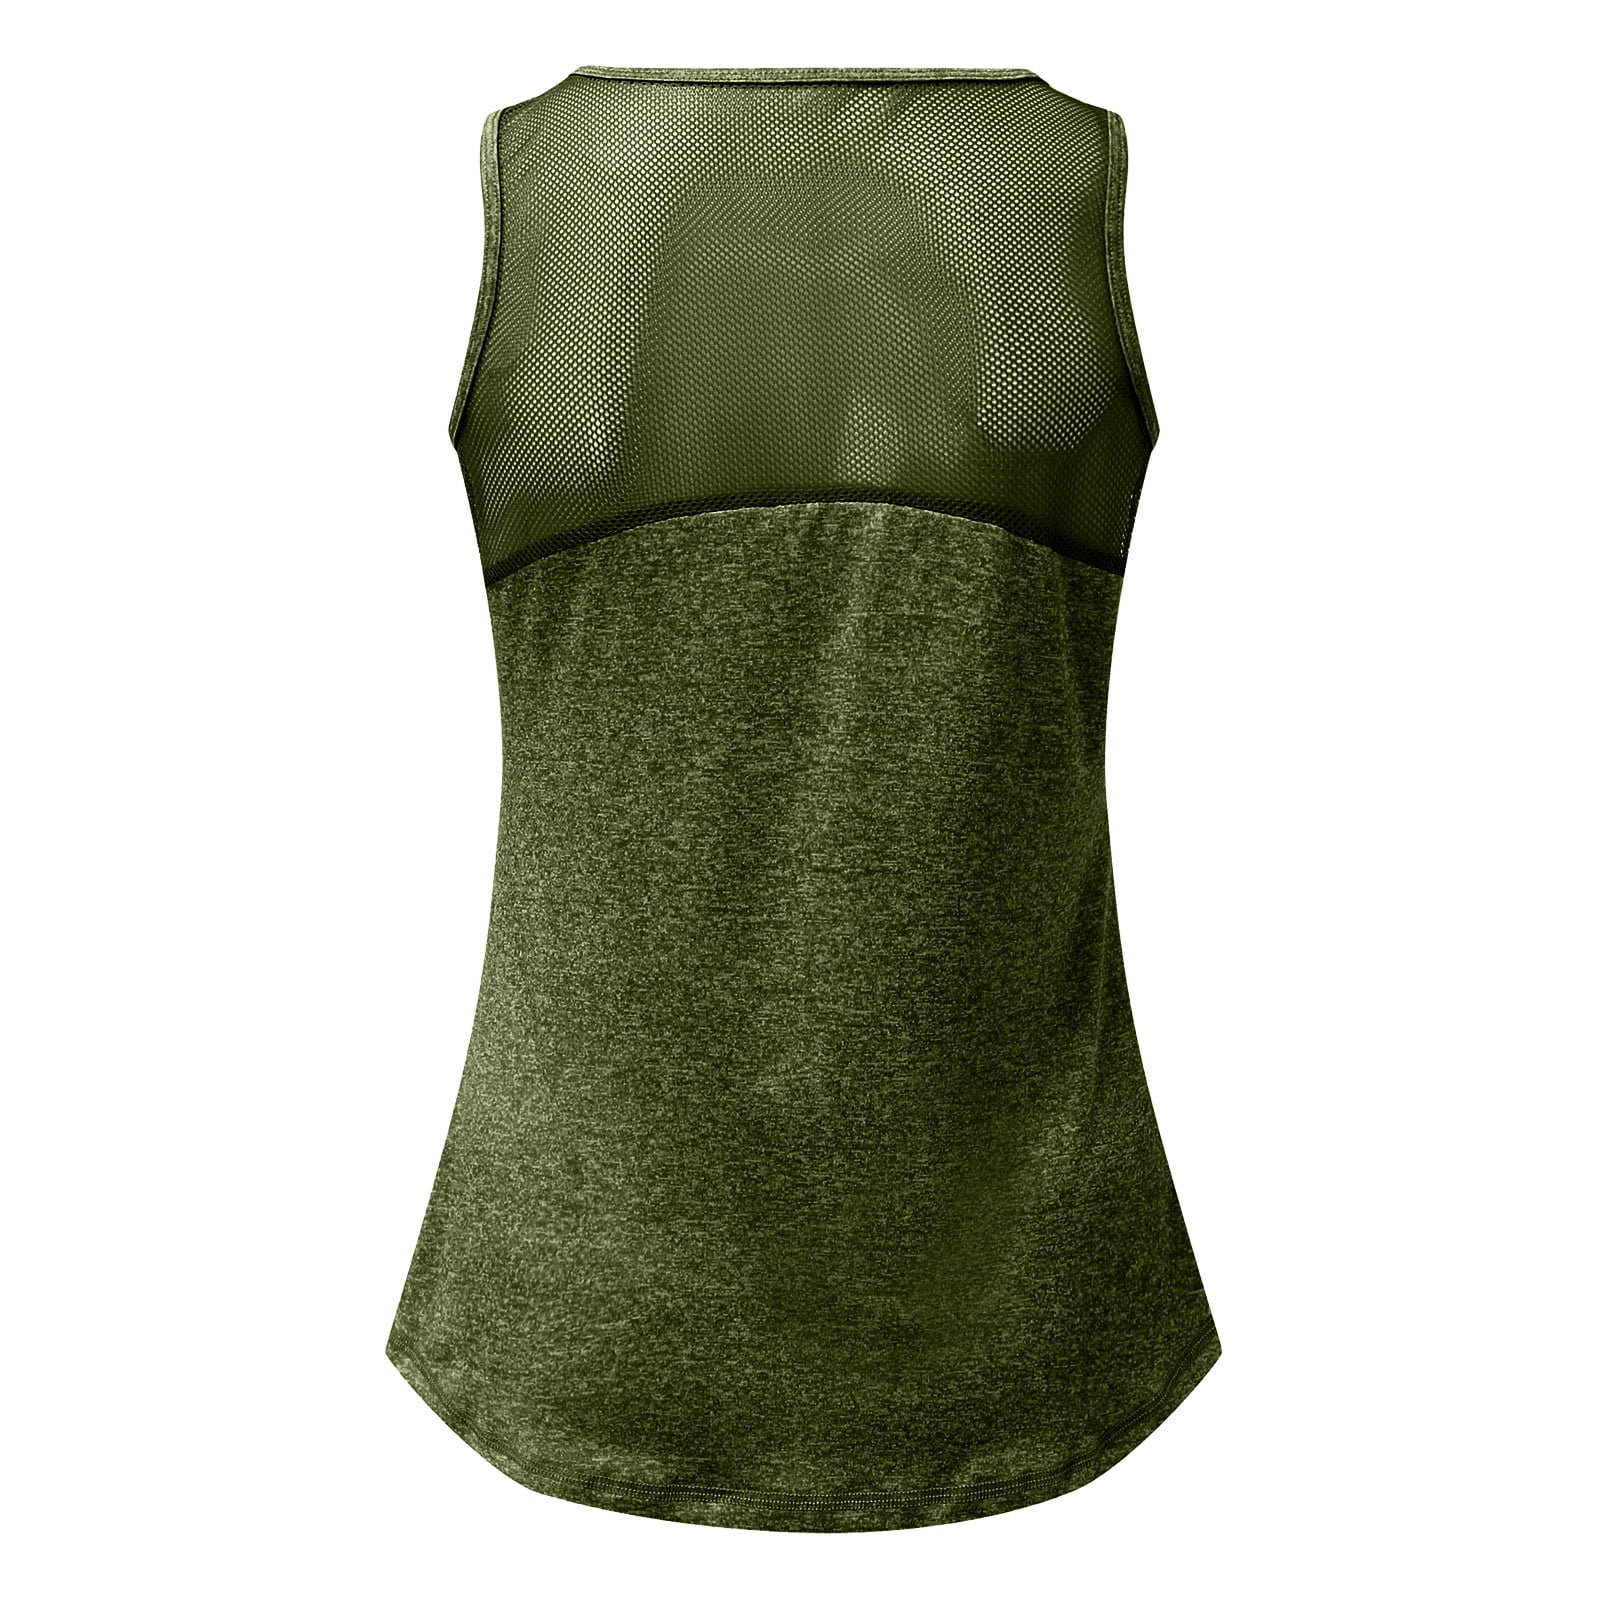 MRULIC tank top for women Women Workout Tops Sports Running Tank Mesh Yoga  Training Shirts Womens tank tops Army Green + S 